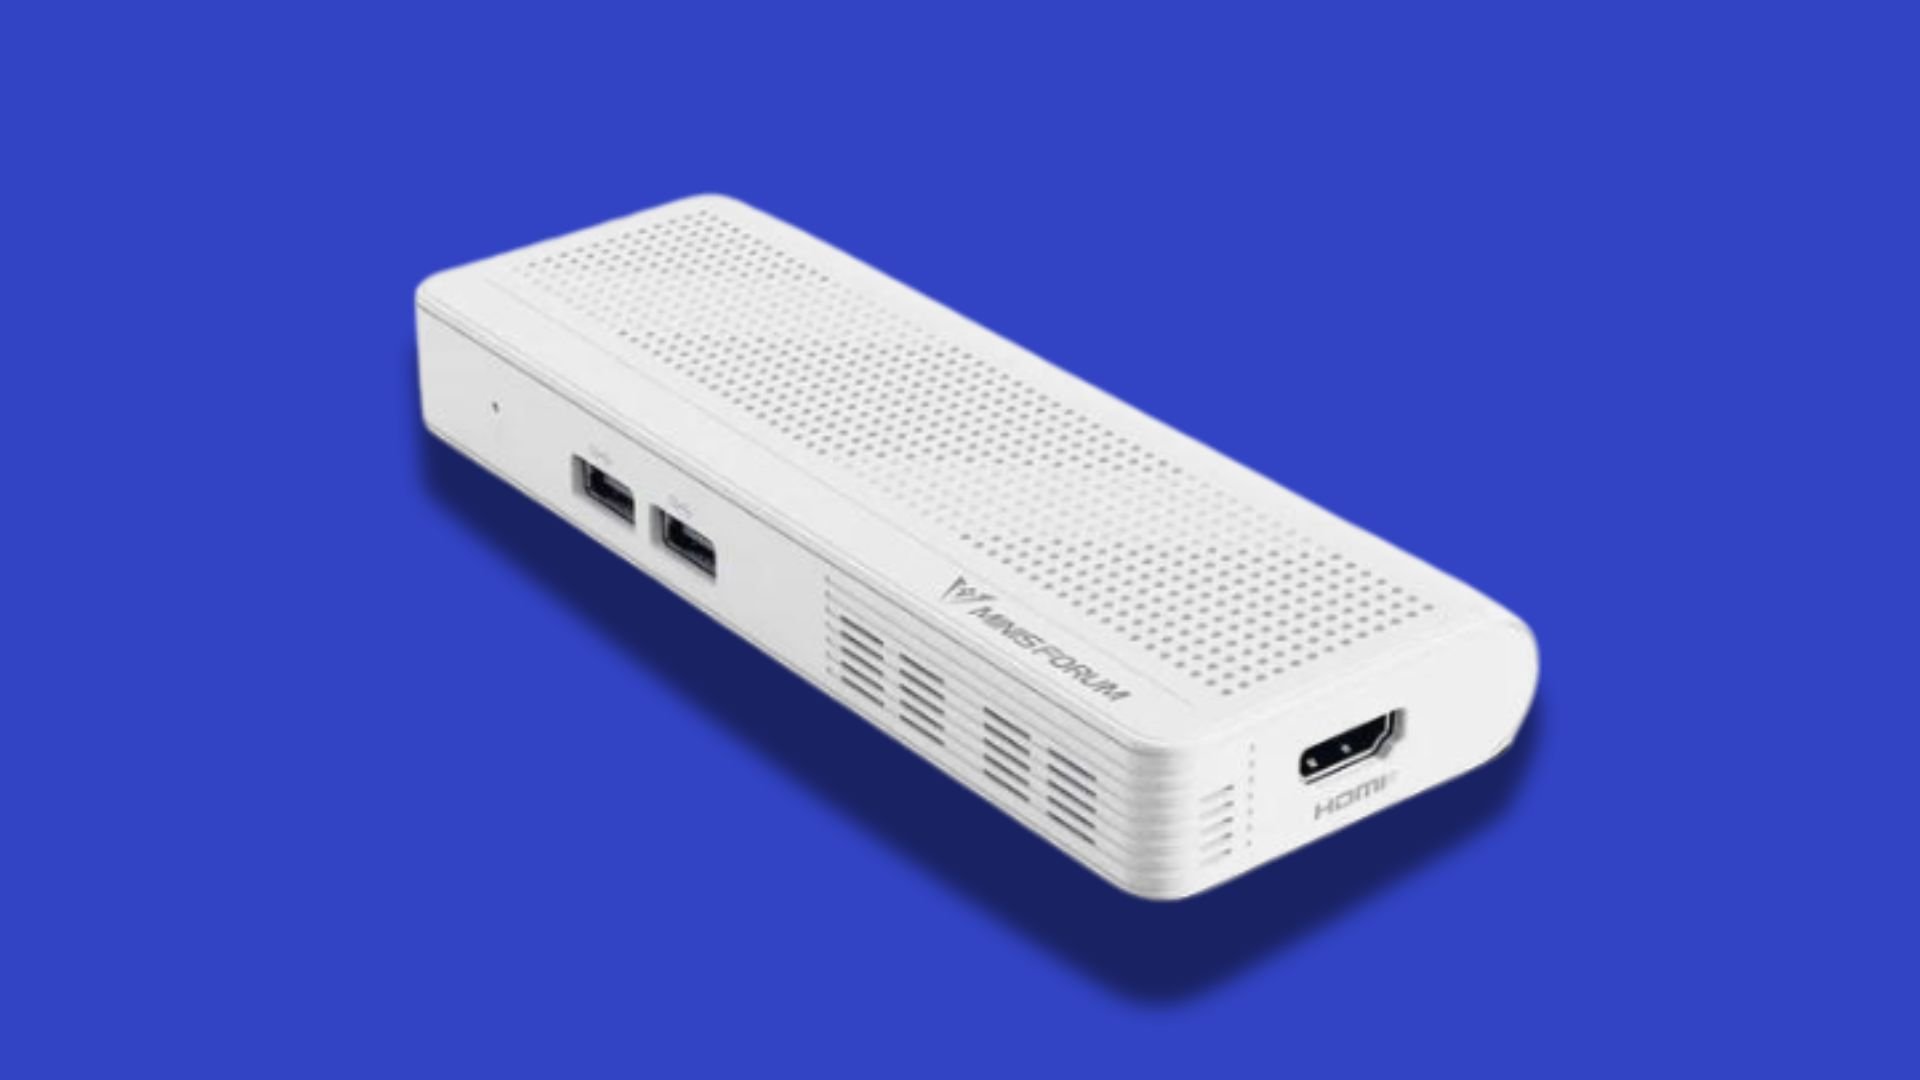 Minisforum S100 Mini PC: A Compact Solution for Modern Computing Needs